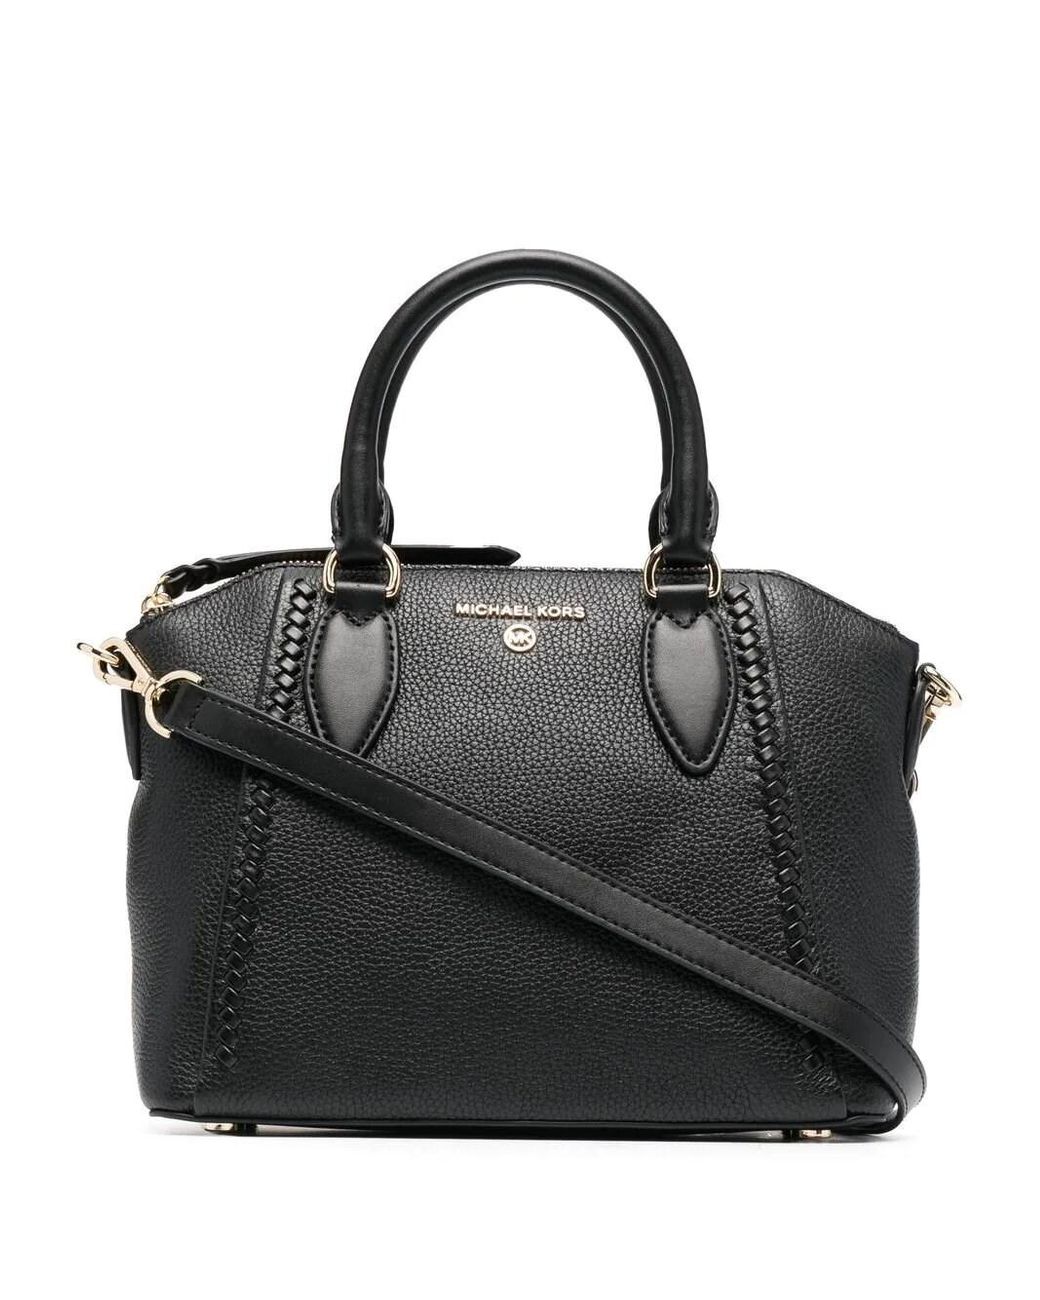 Michael Kors Sienna Calf-leather Tote Bag in Black | Lyst UK